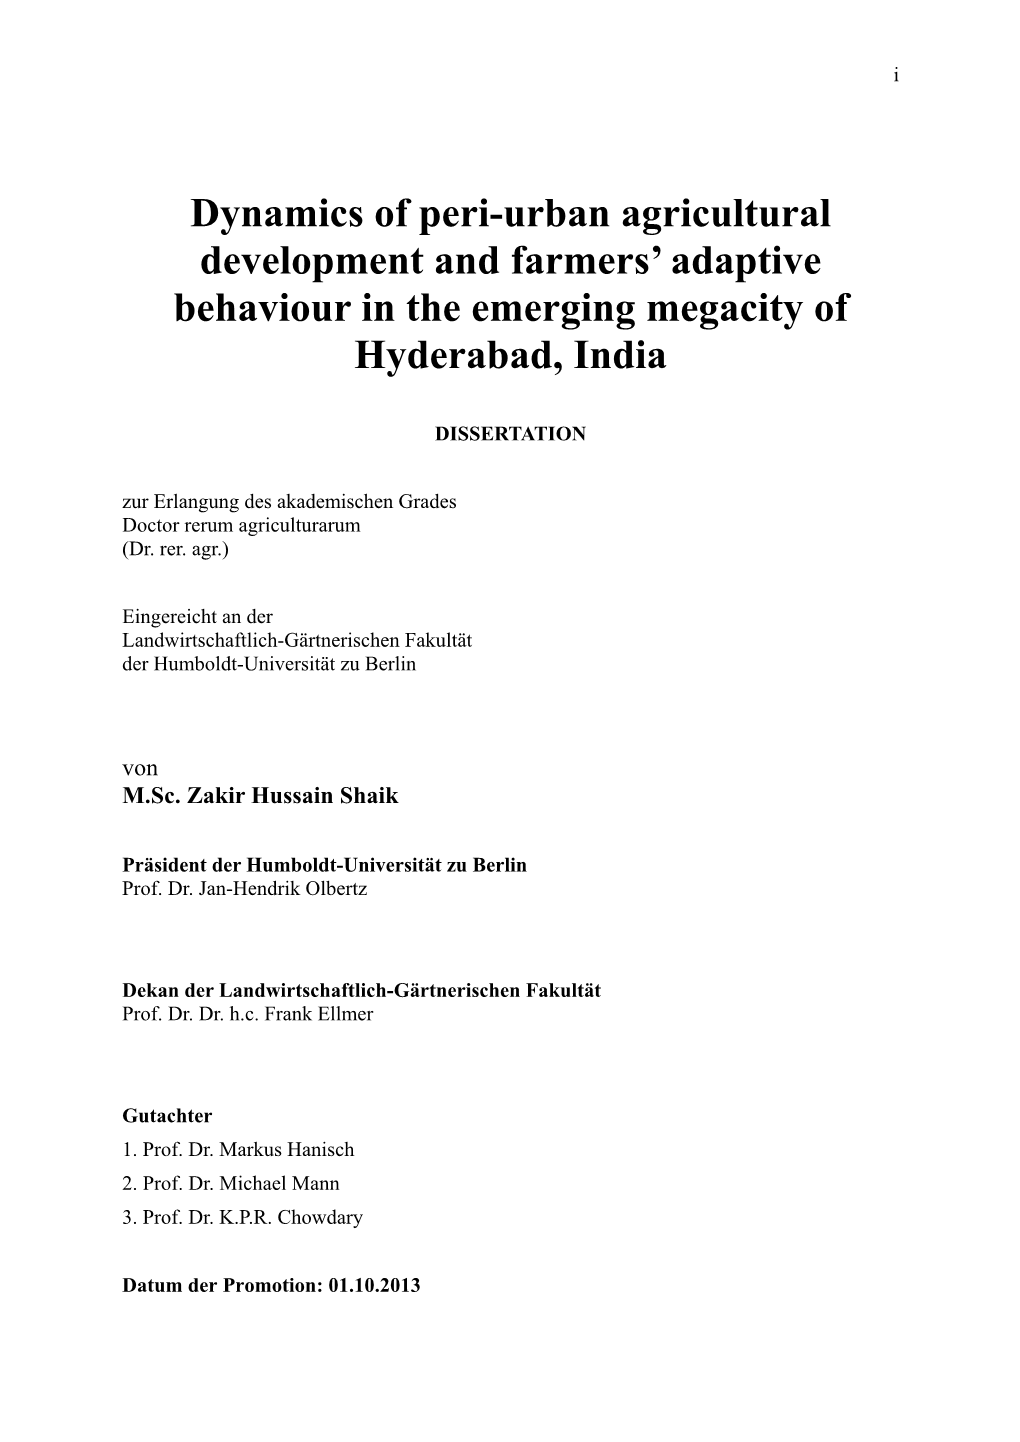 Dynamics of Peri-Urban Agricultural Development and Farmers' Adaptive